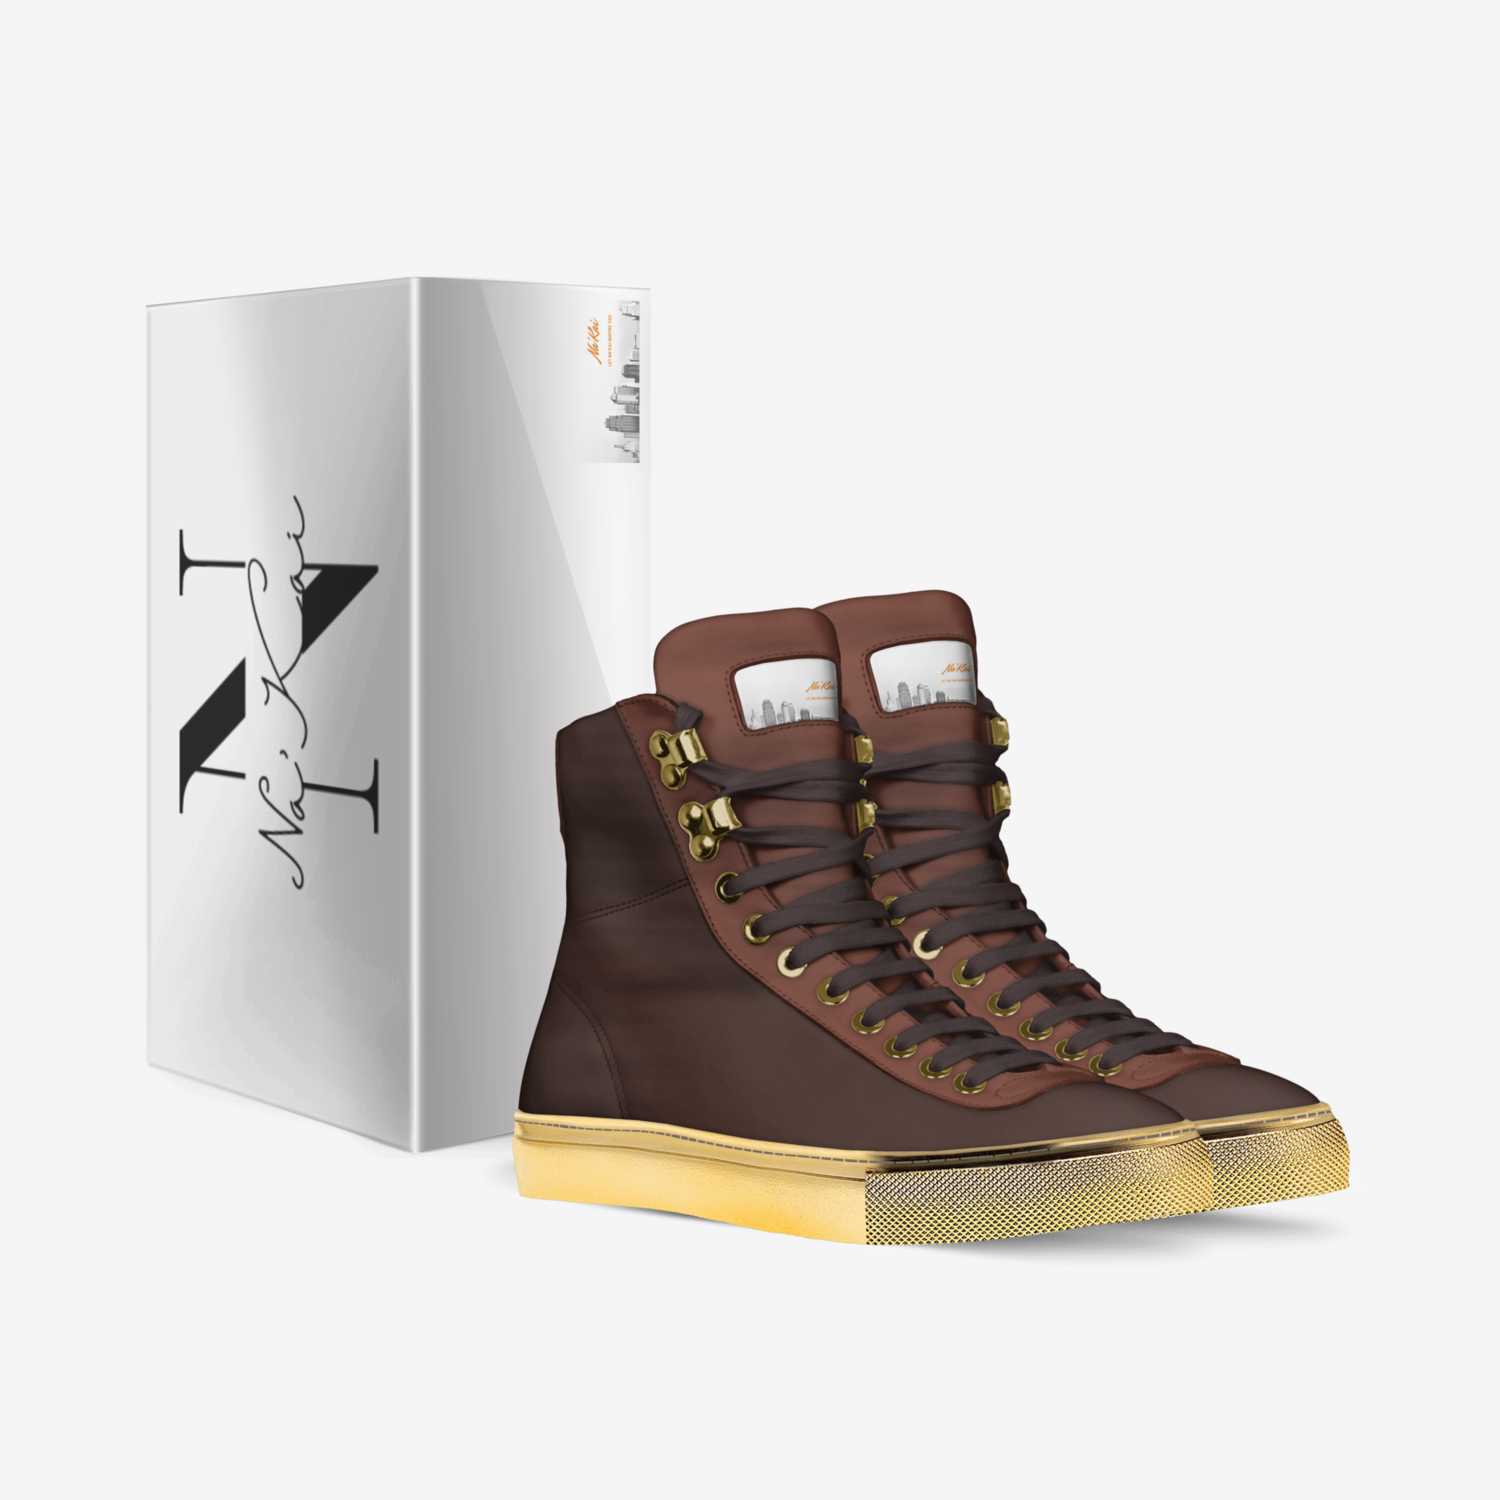 Na'Kai custom made in Italy shoes by Lakeesha Rice | Box view